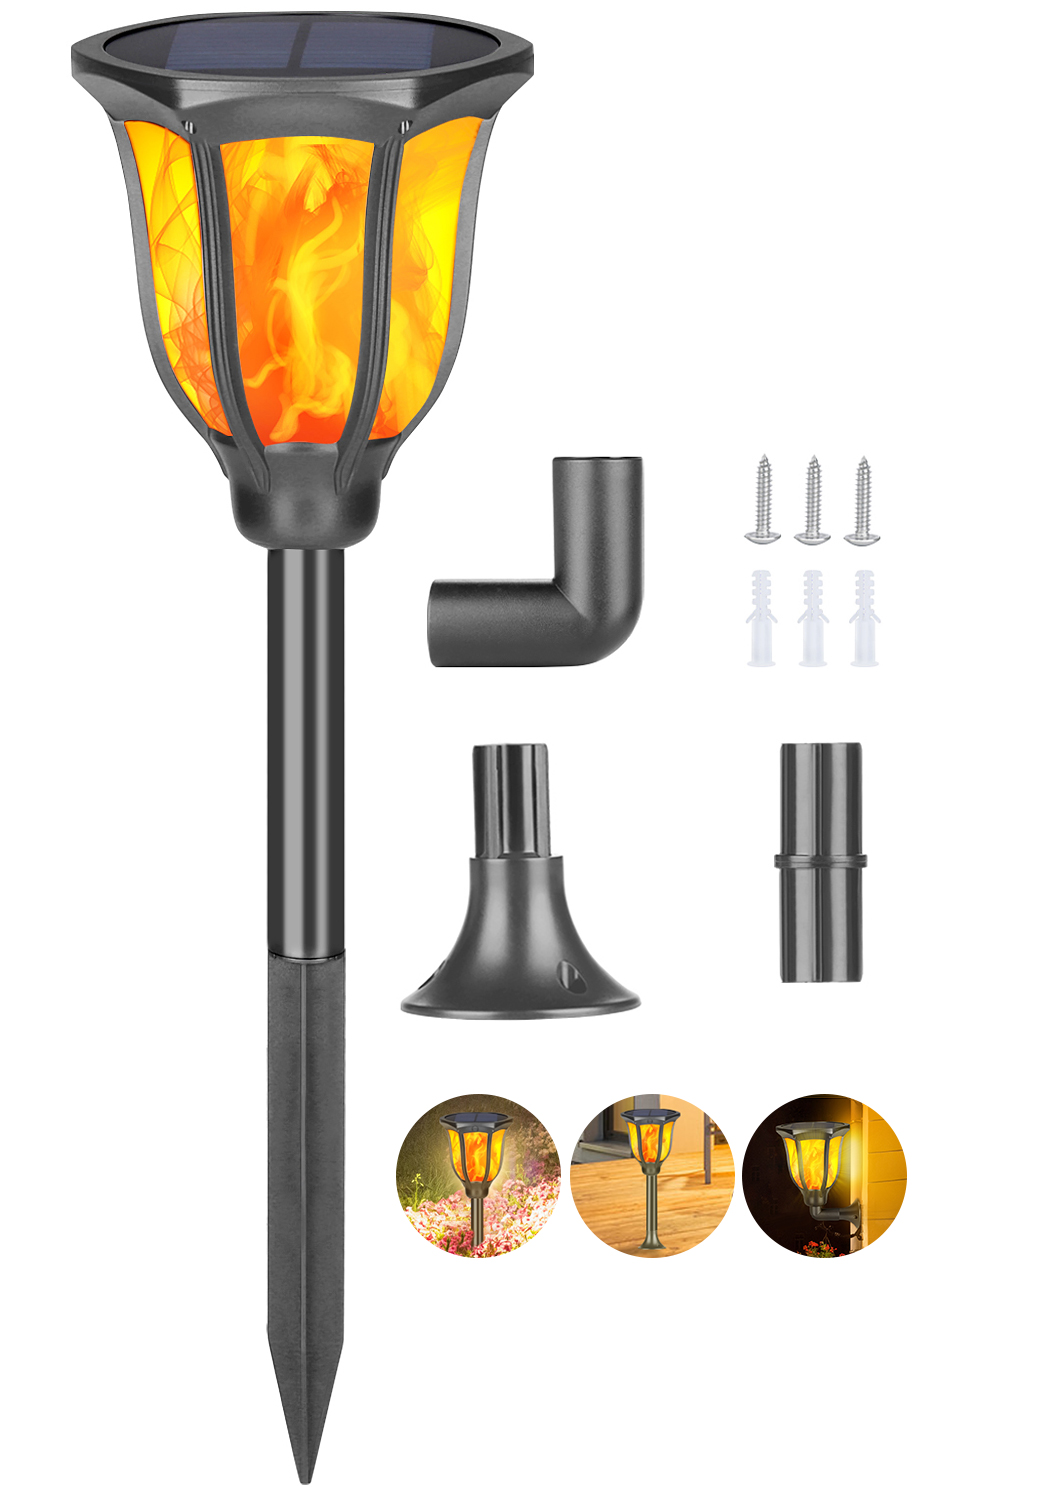 LITOM 12 Pcs Solar Torch Flame Dancing Light, IP65 Waterproof